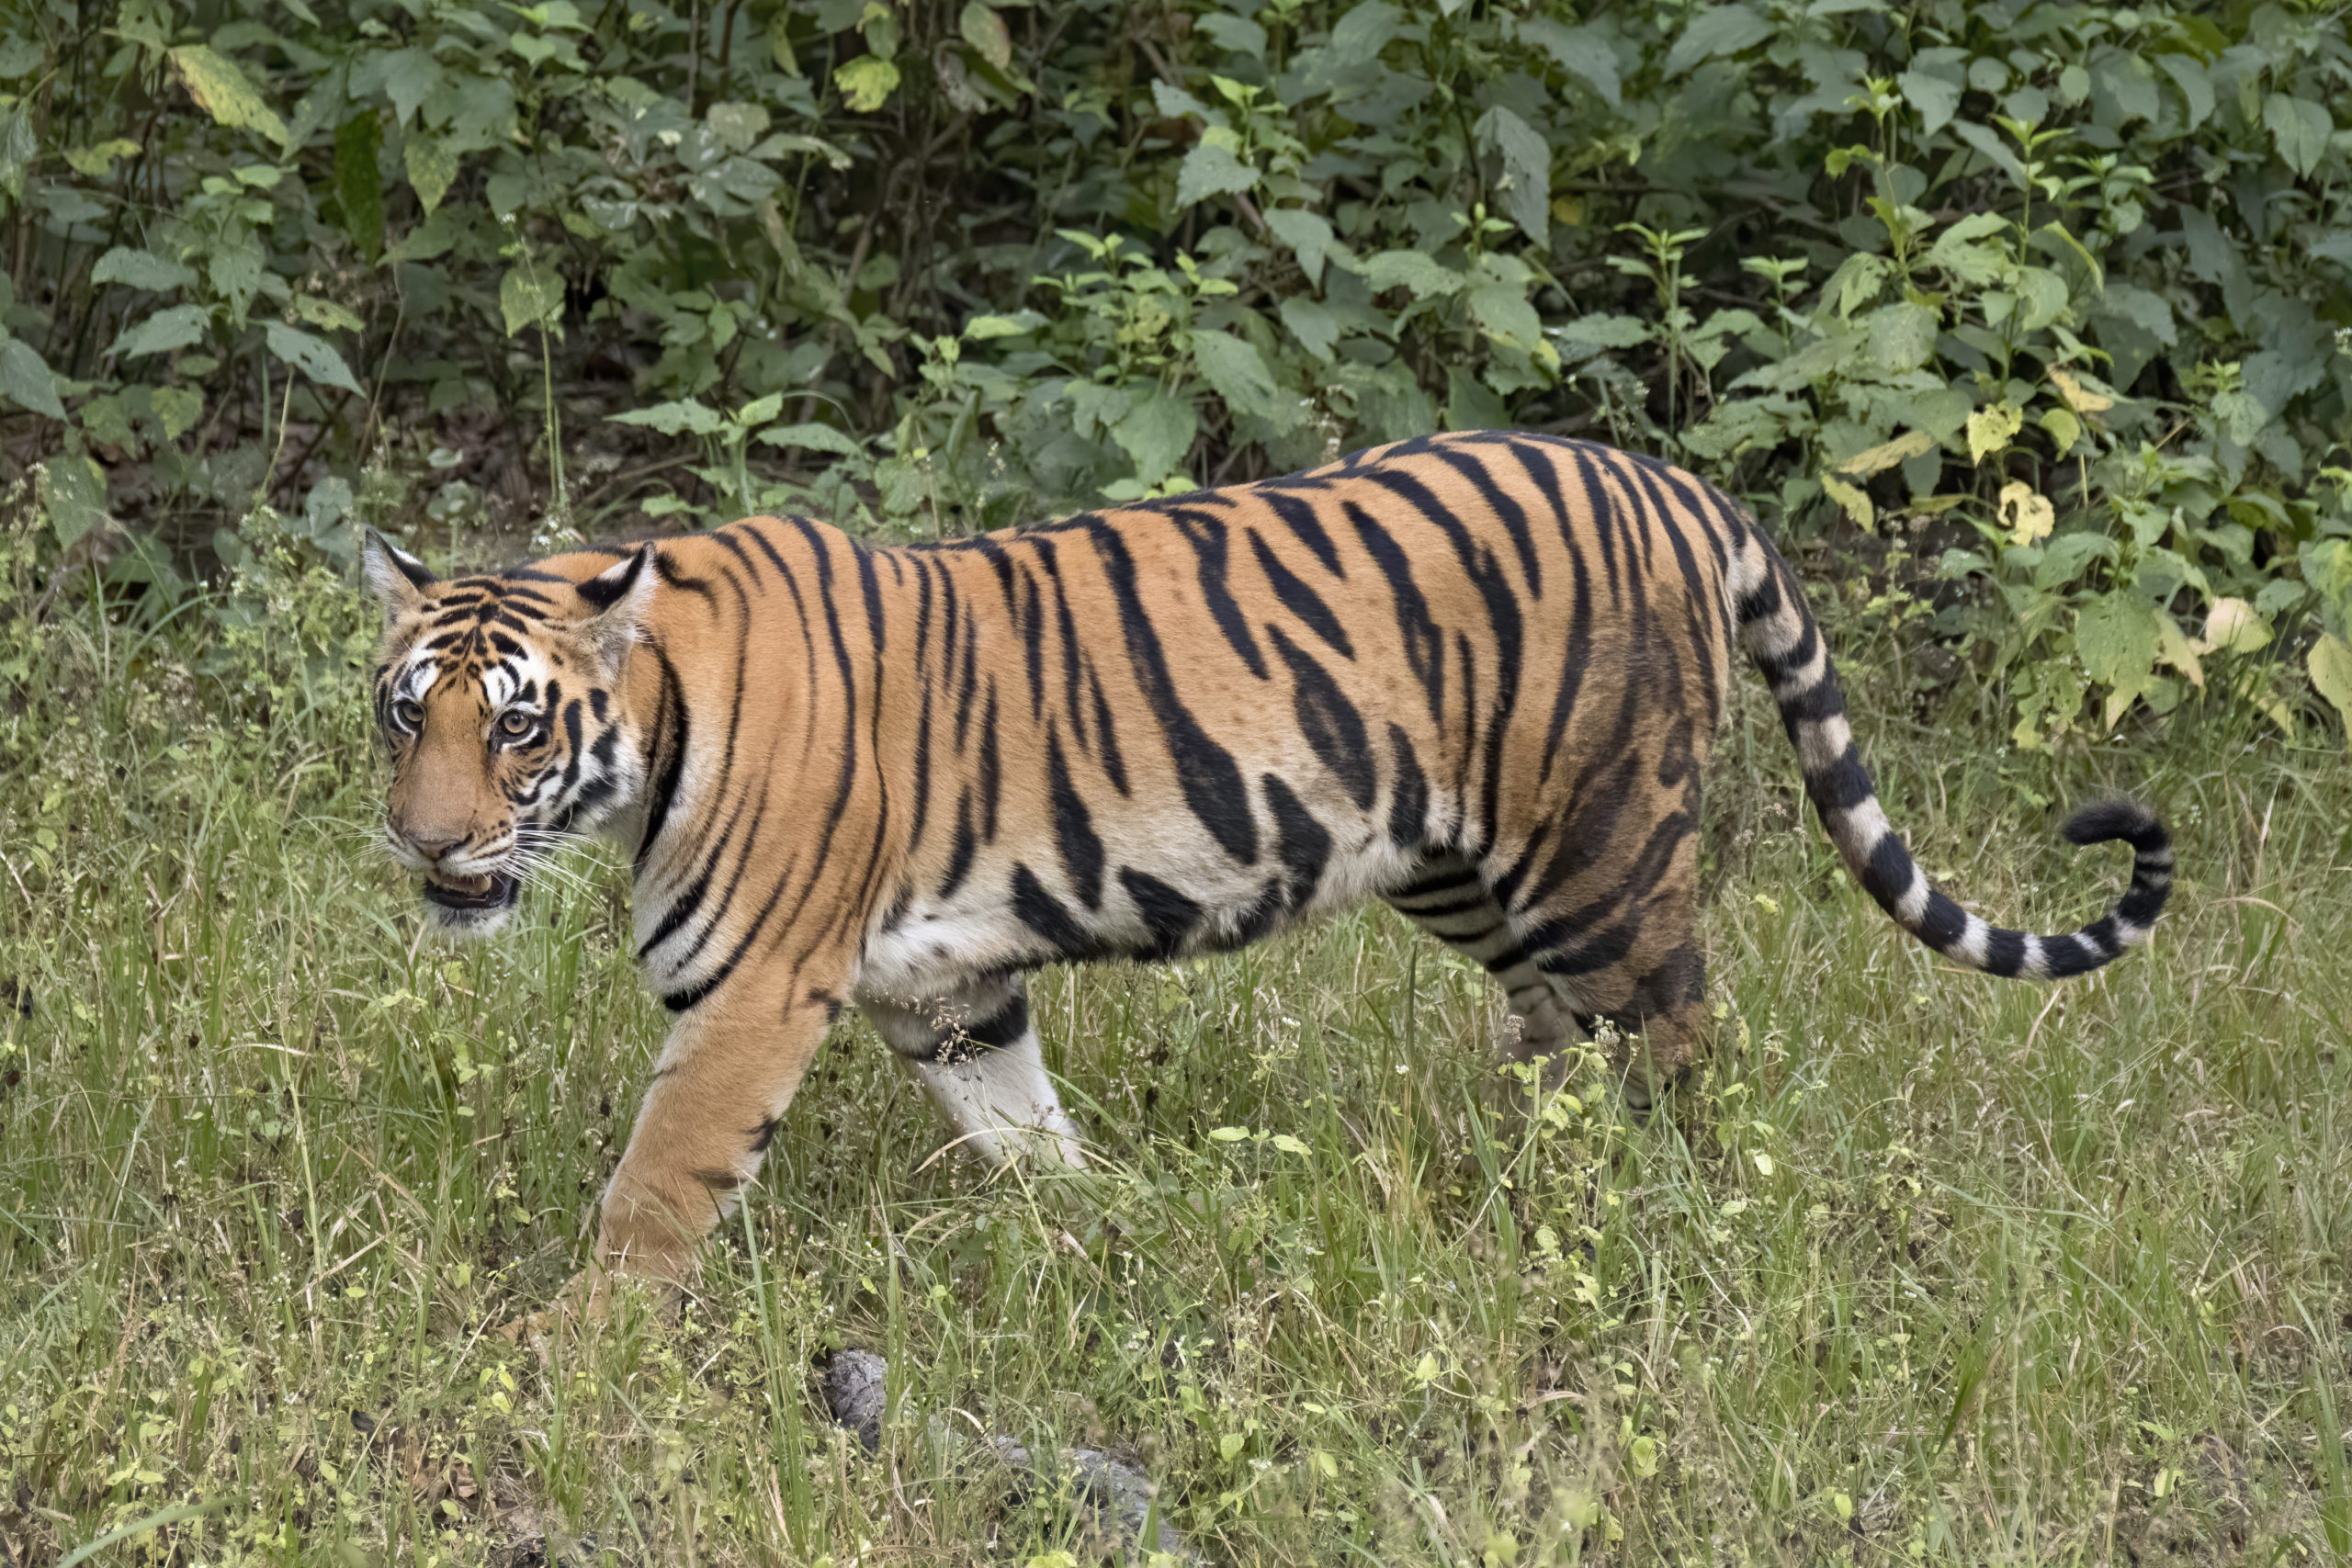 Man goes missing after tiger attacks him